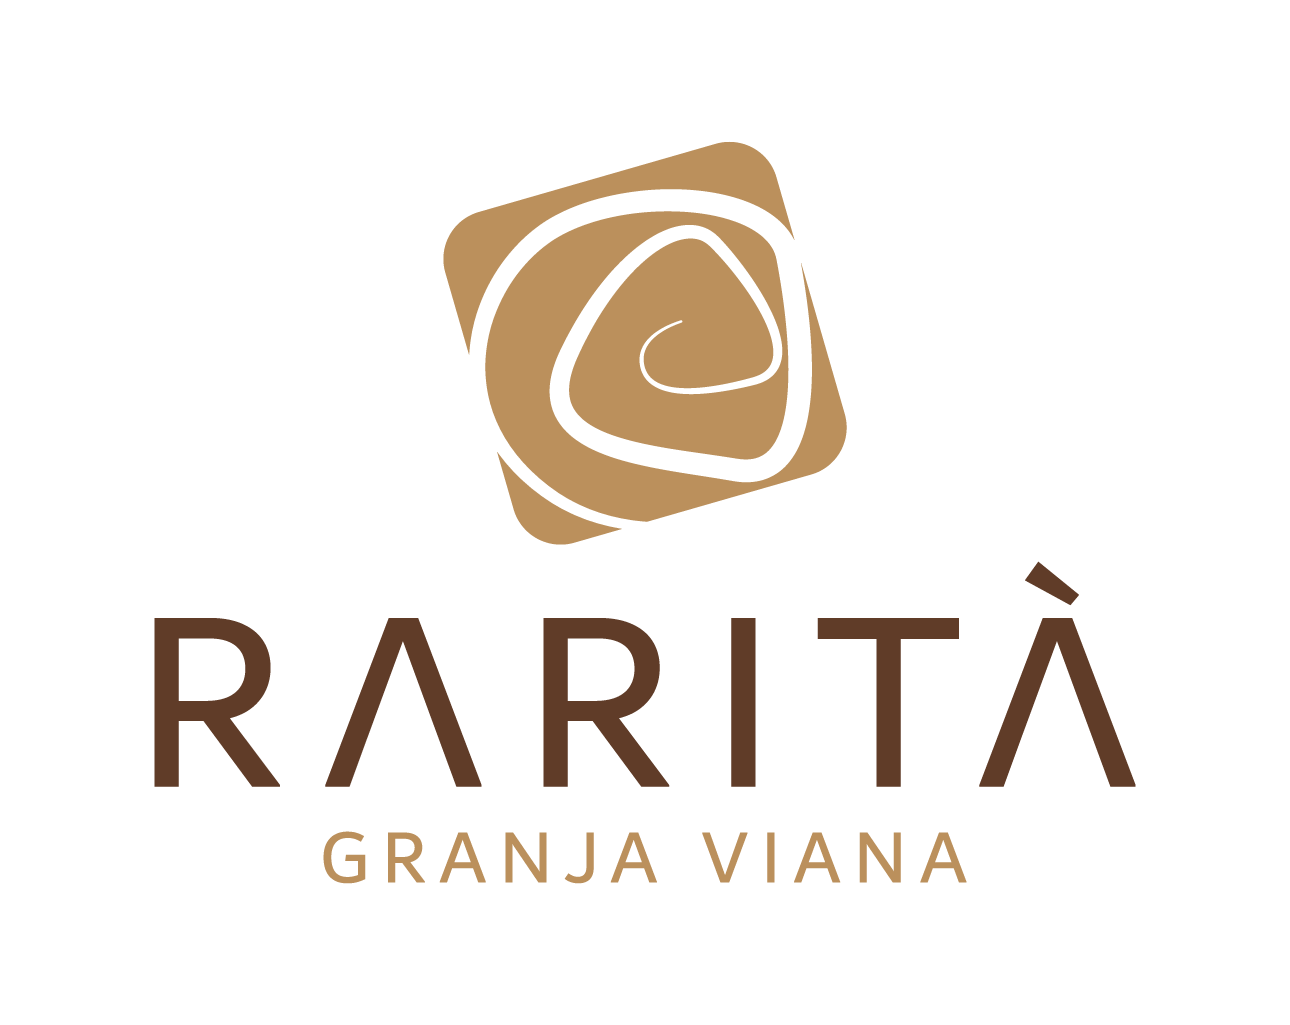 Logo do empreendimento Rarità Granja Viana Cotia SP